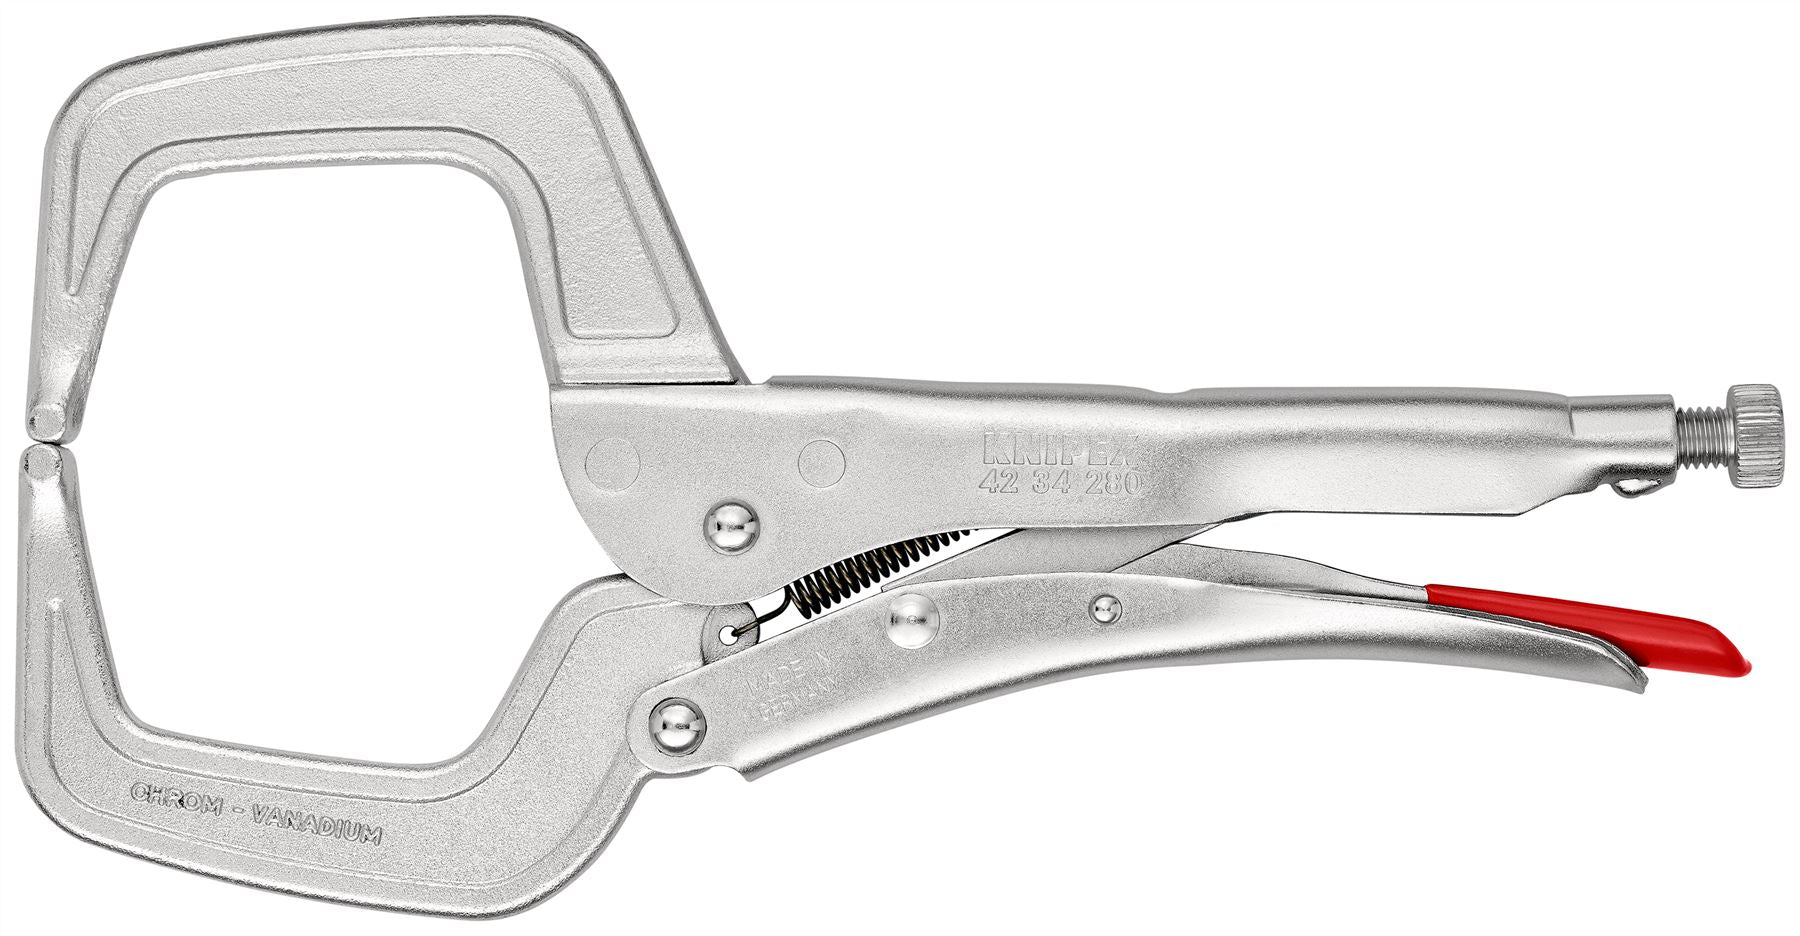 Knipex Welding Grip Locking Pliers C Clamp 280mm Galvanised 42 34 280